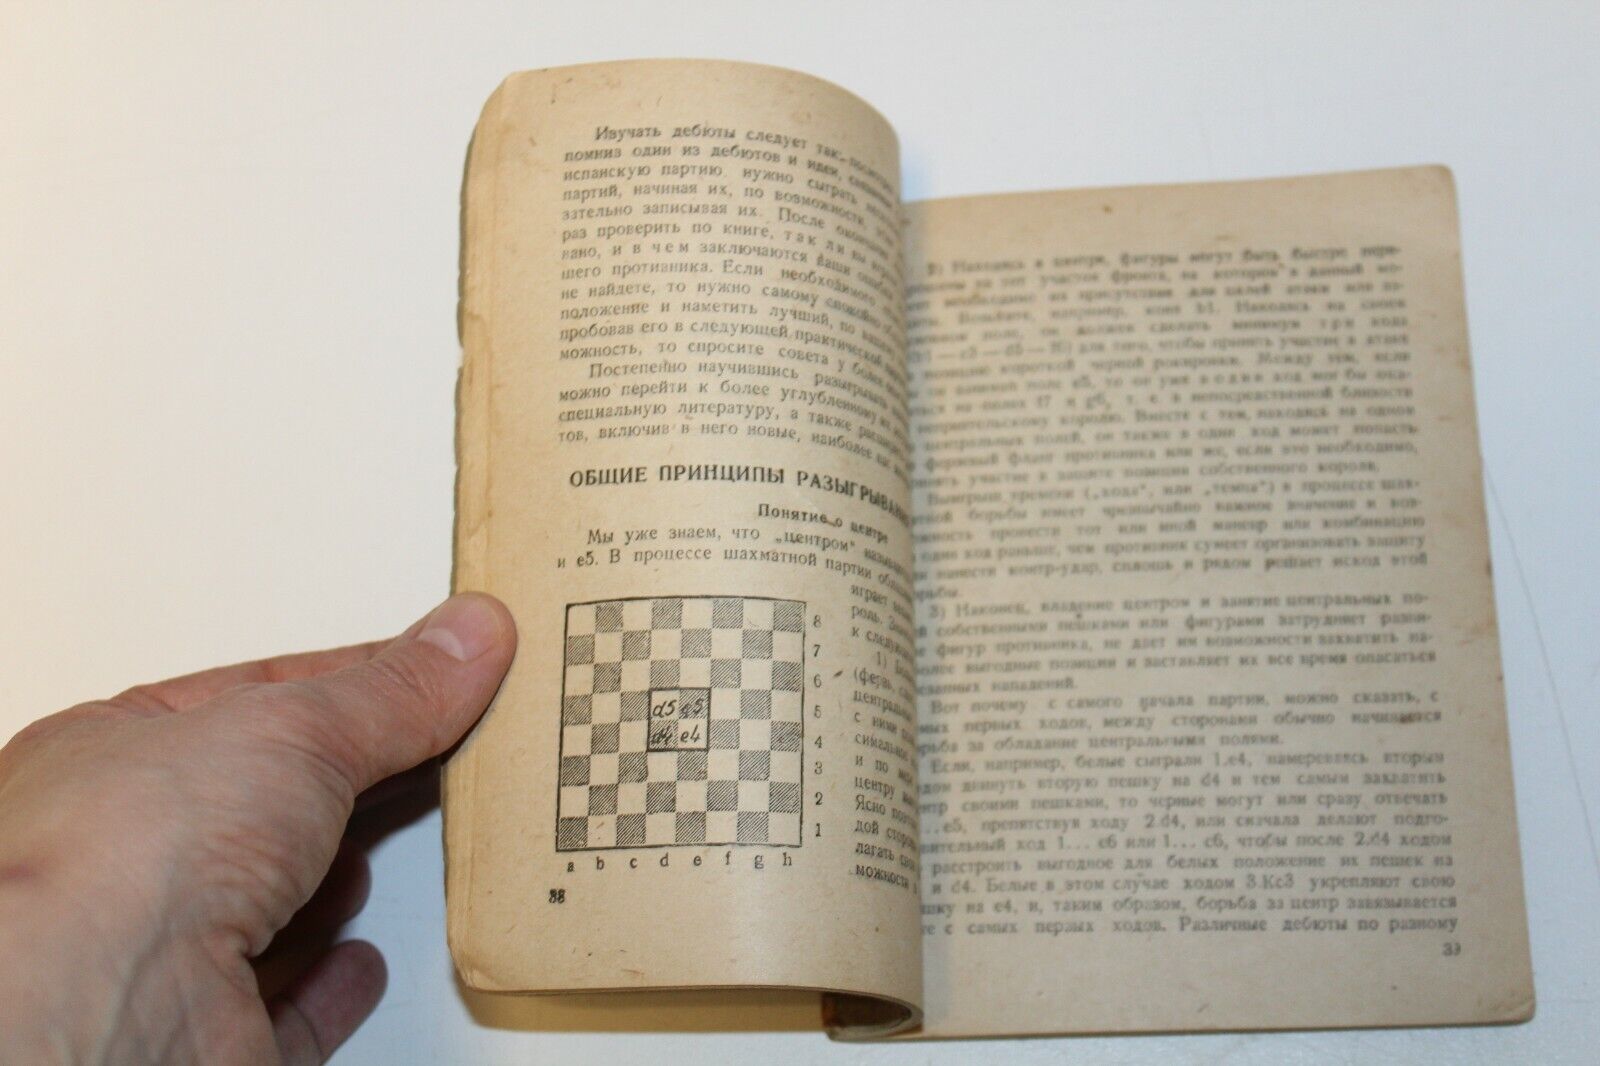 11534.Russian chess book: N.Zubarev. V. Panov. Basic Chess Game Tutorial 1937